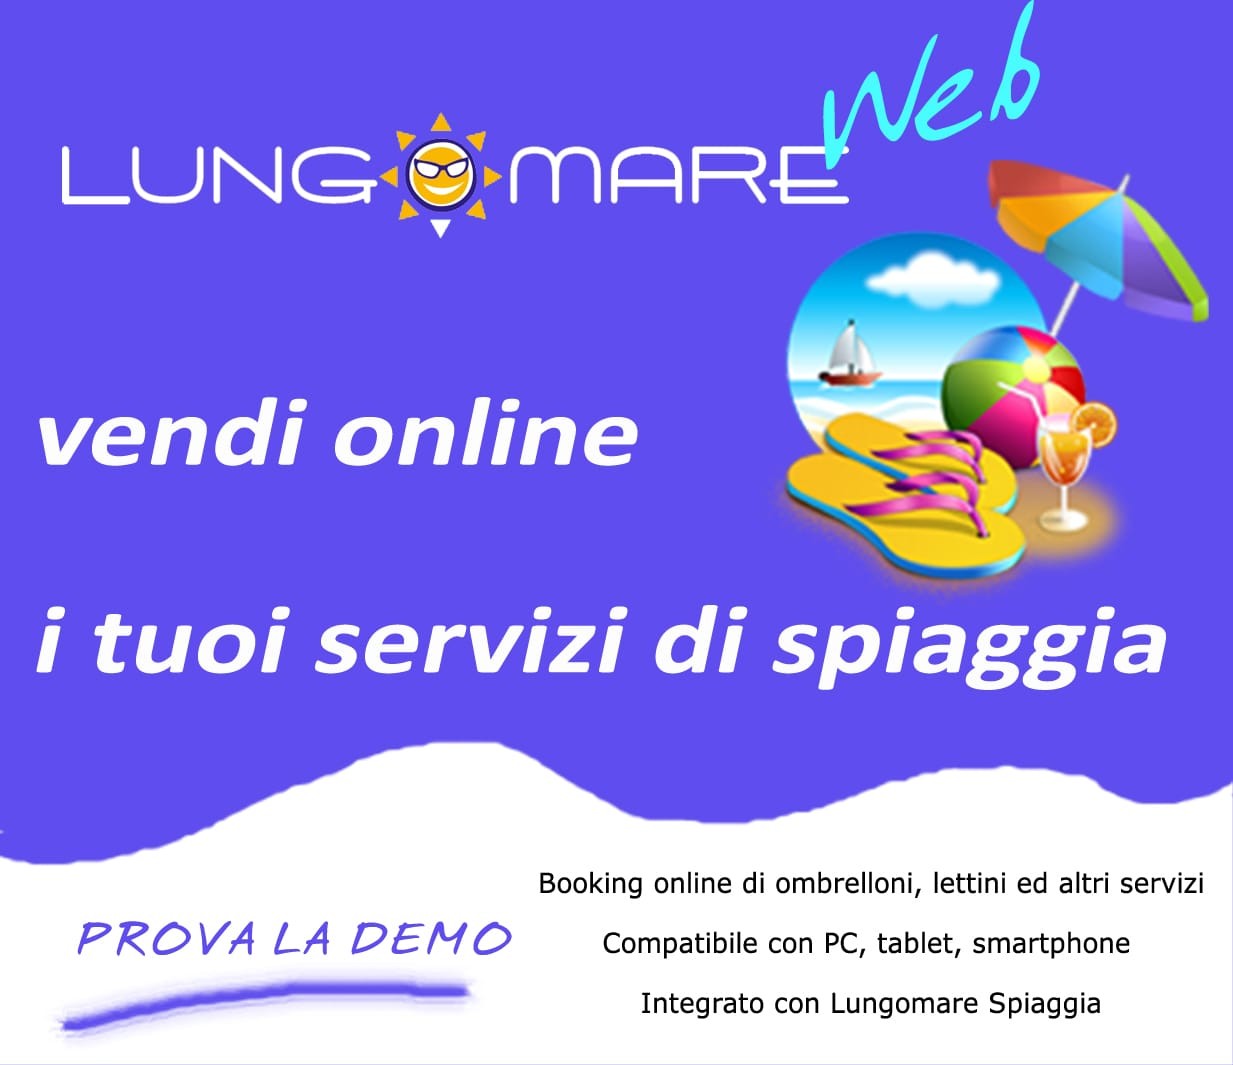 Lungomare web